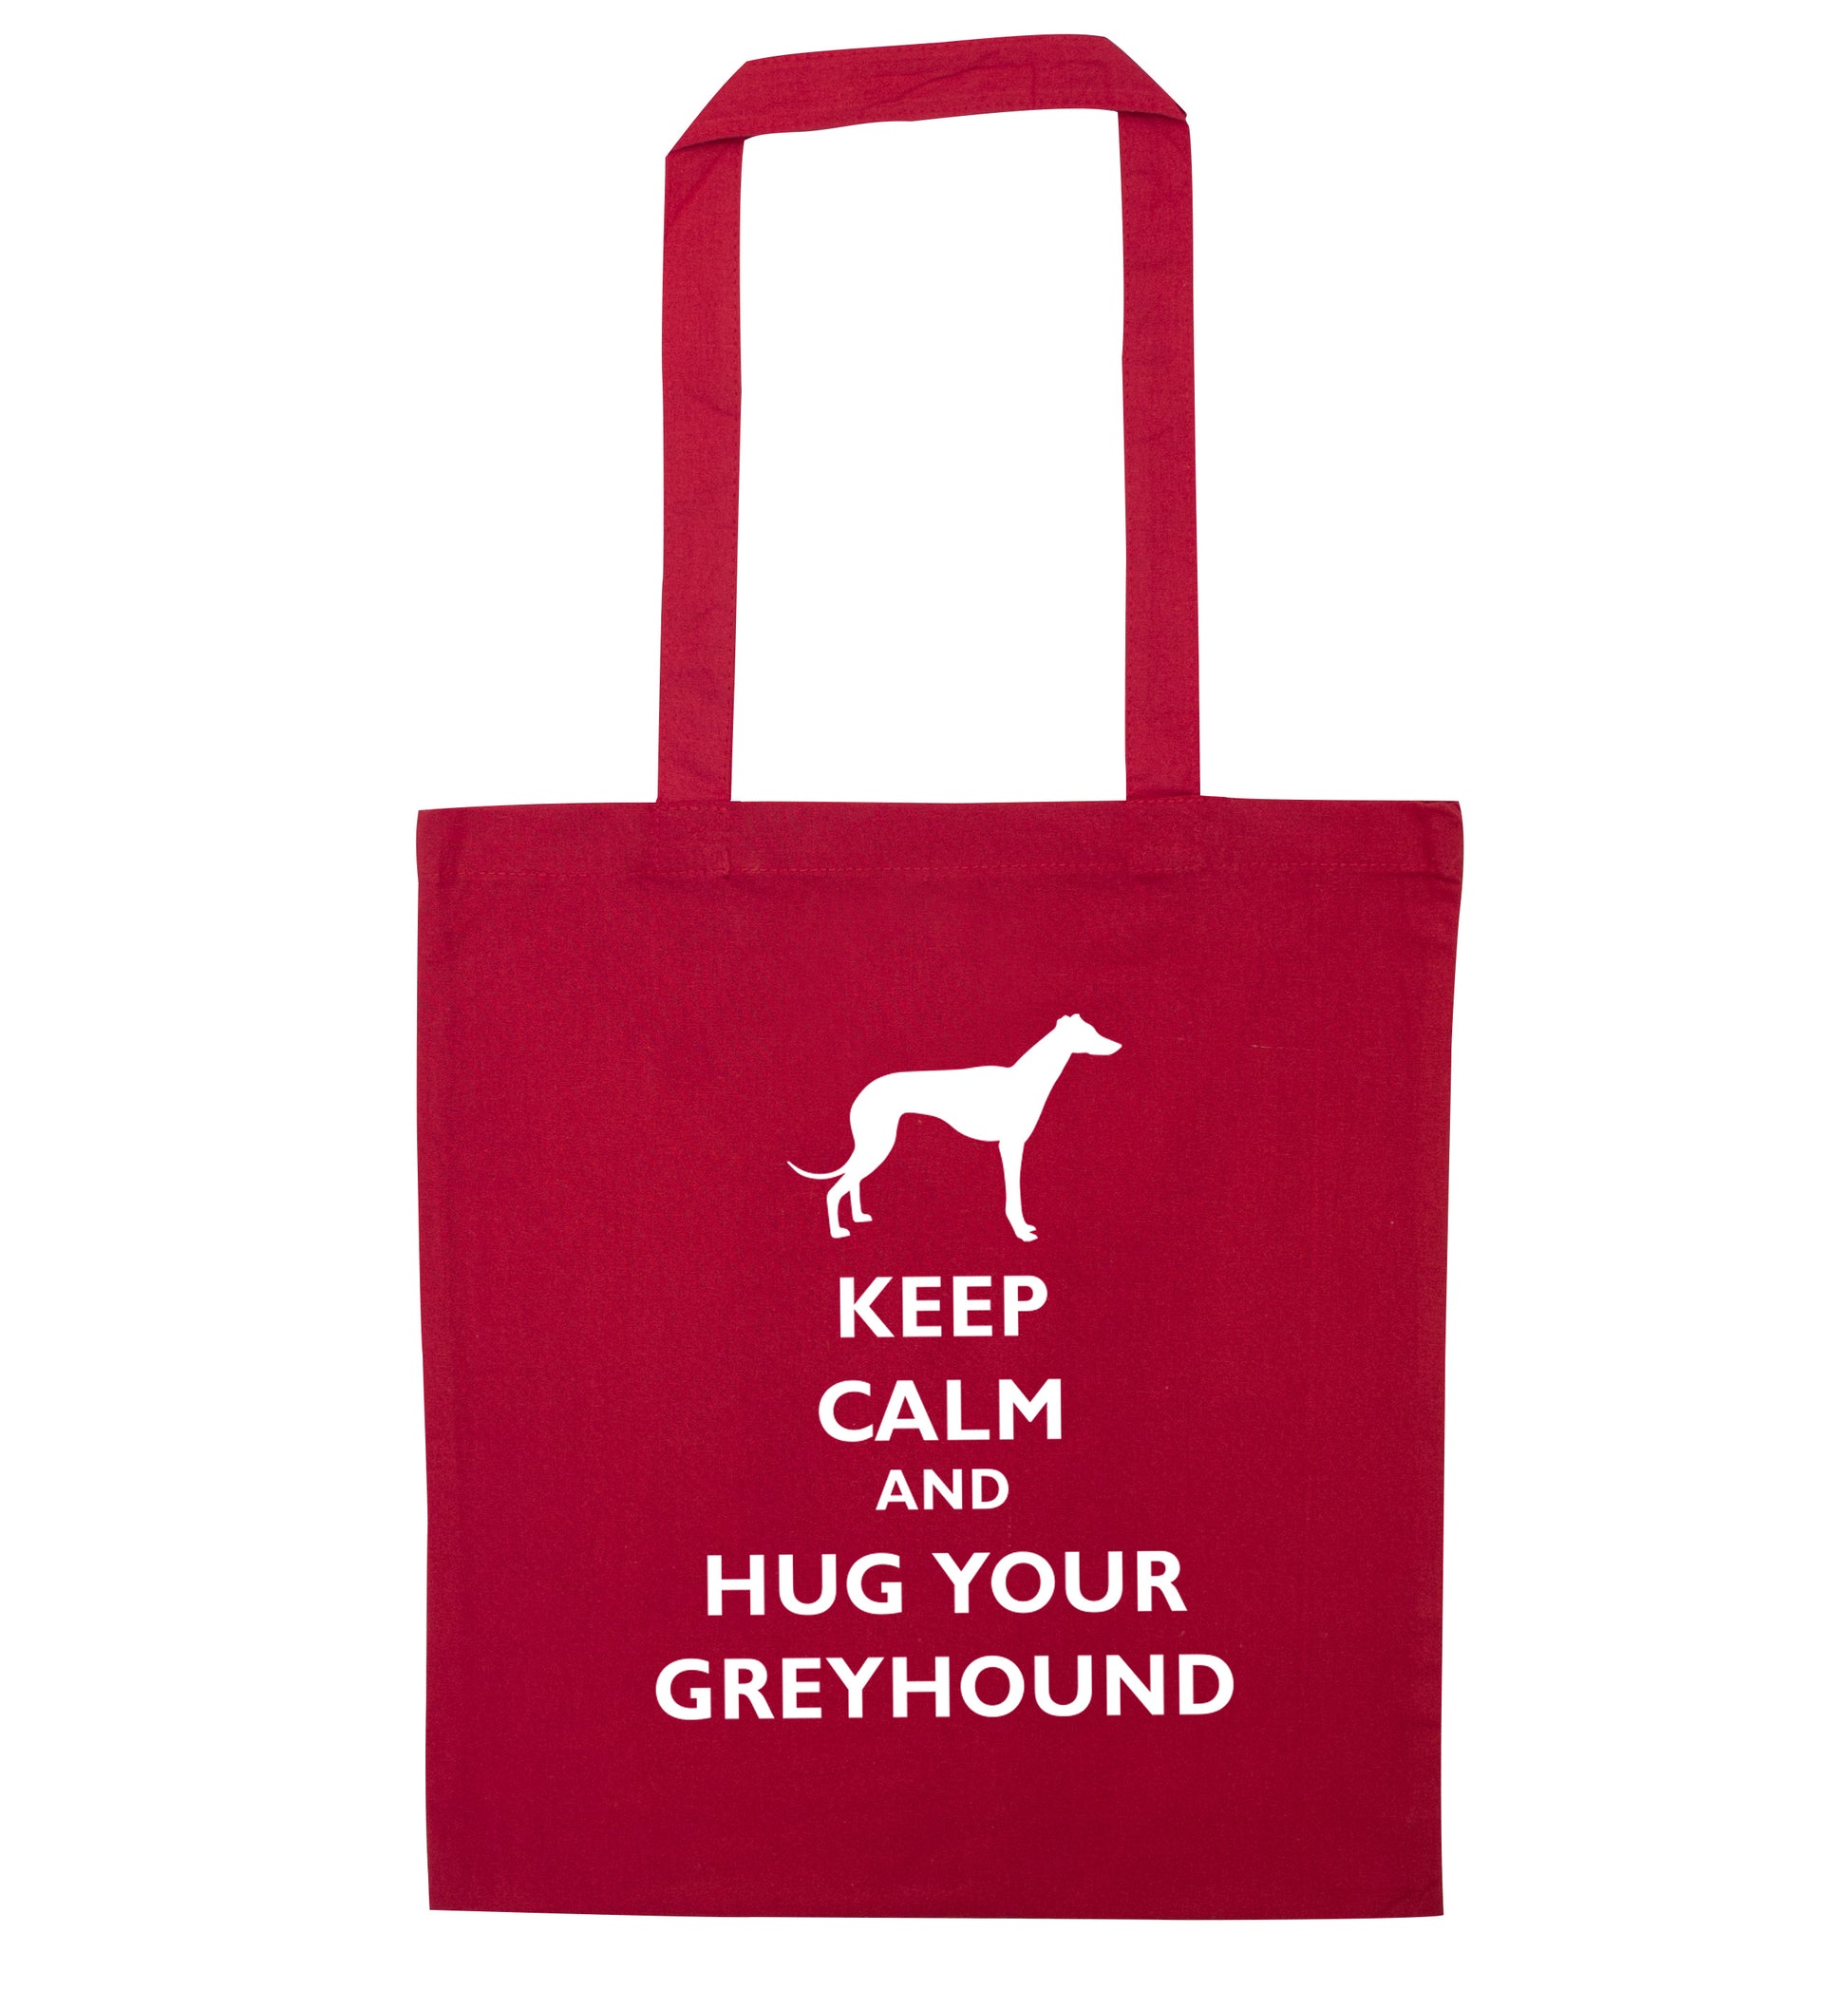 Keep calm and hug your greyhound red tote bag